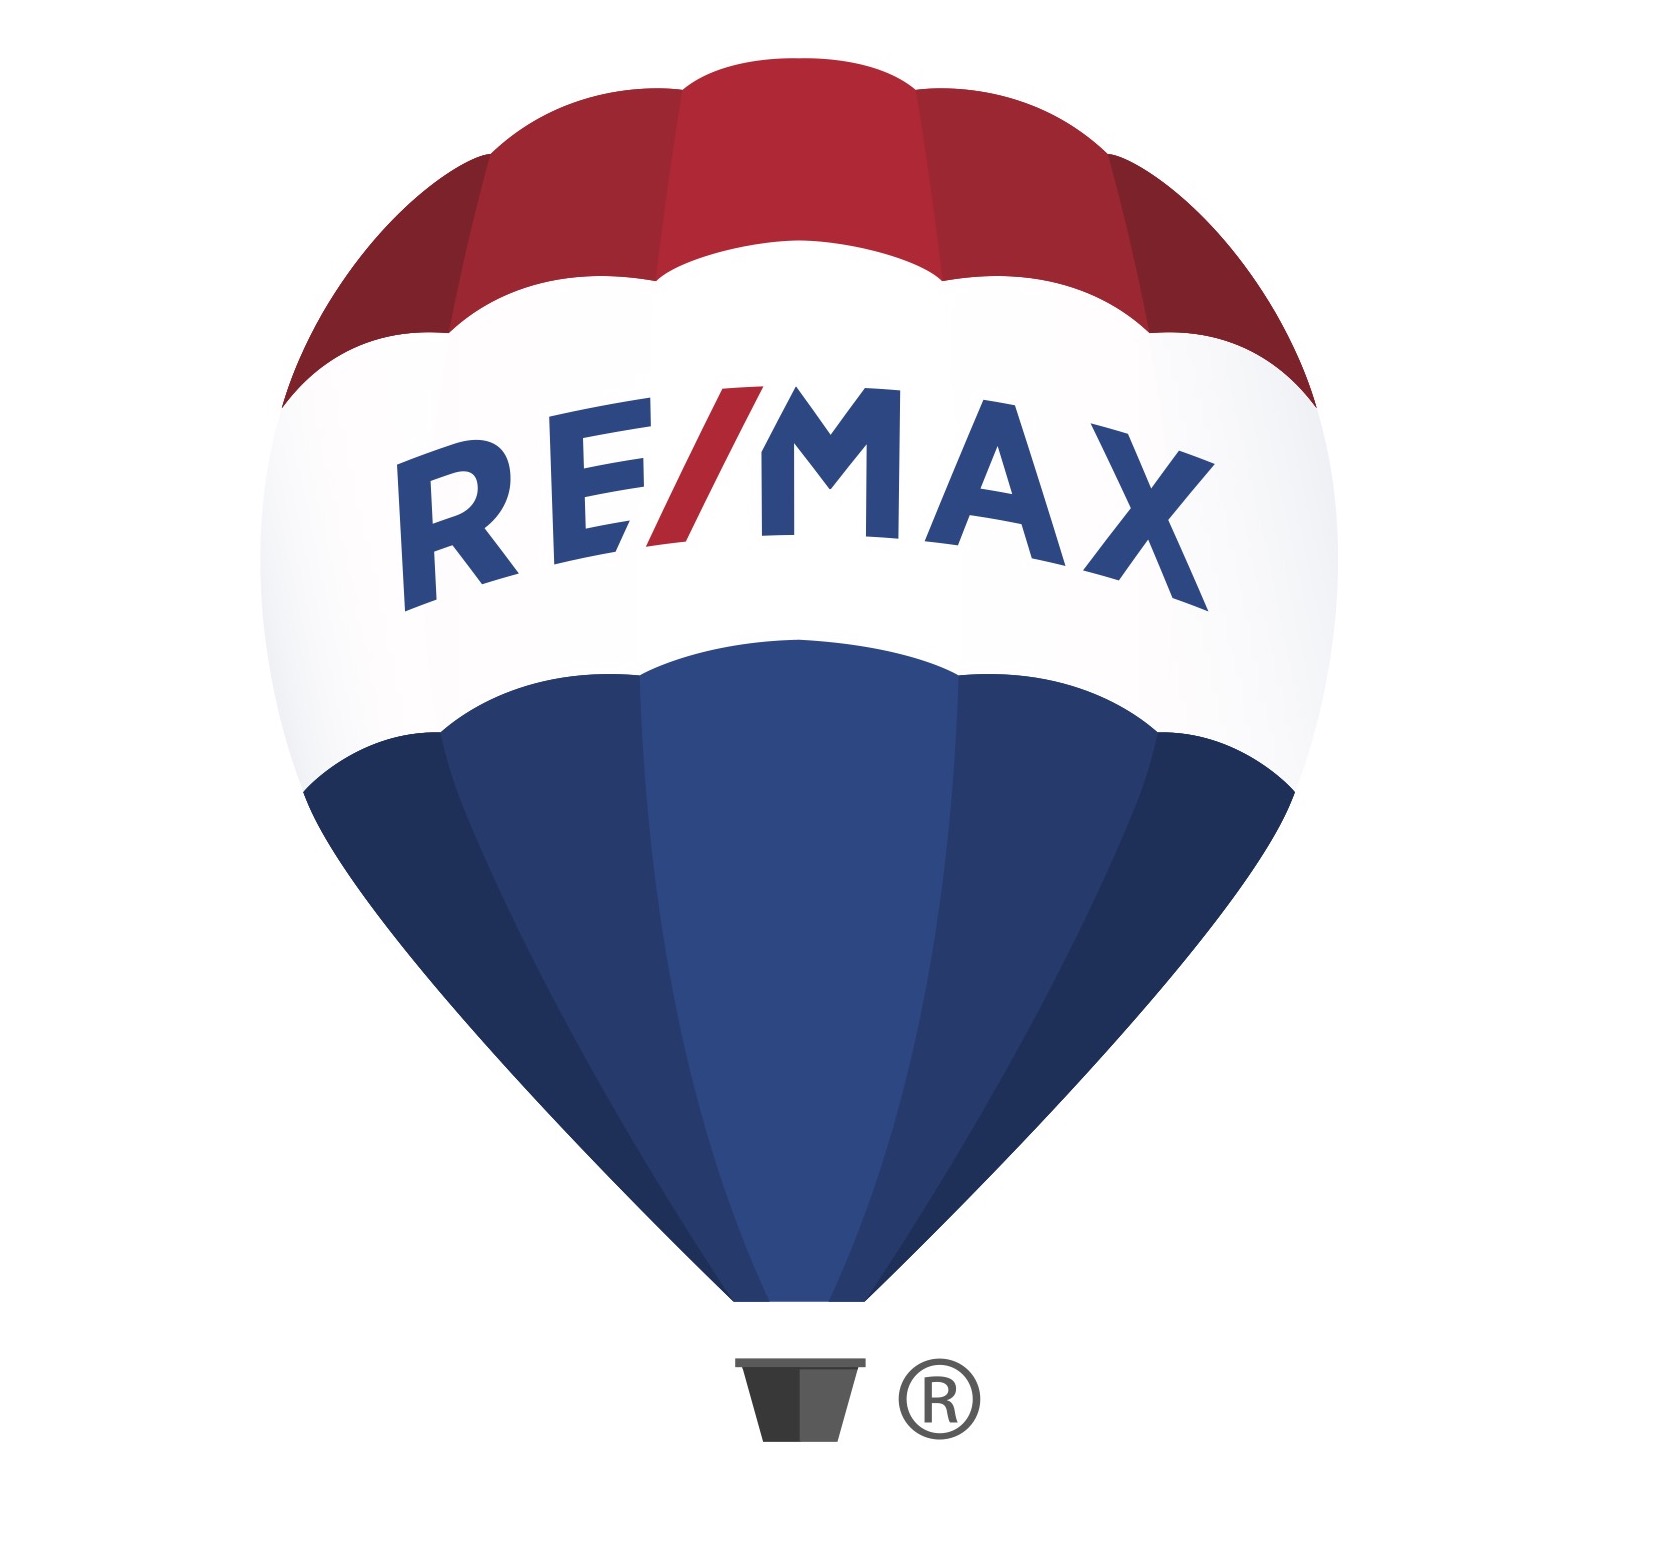 REMAX Elite Rentals Real Estate Agent